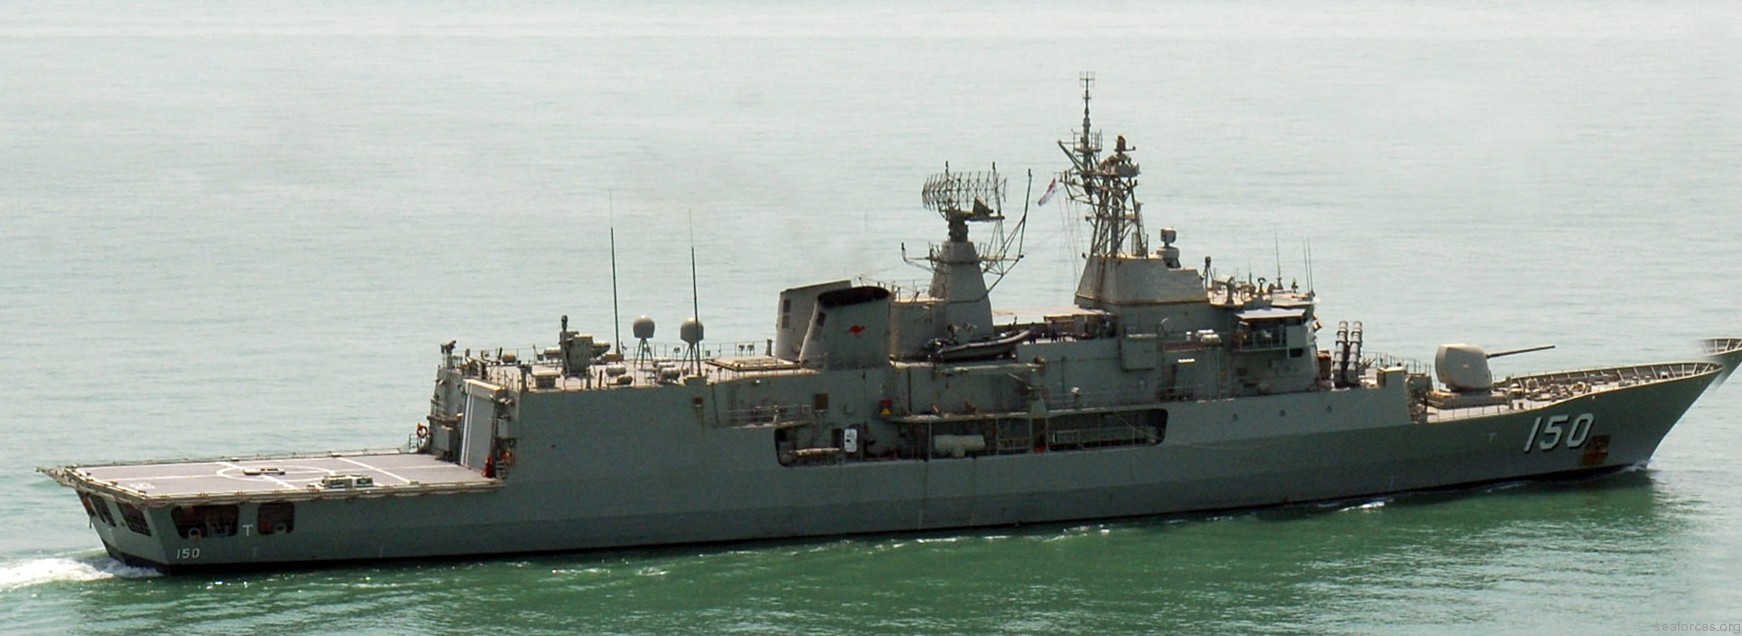 ffh-150 hmas anzac frigate royal australian navy 07 persian gulf